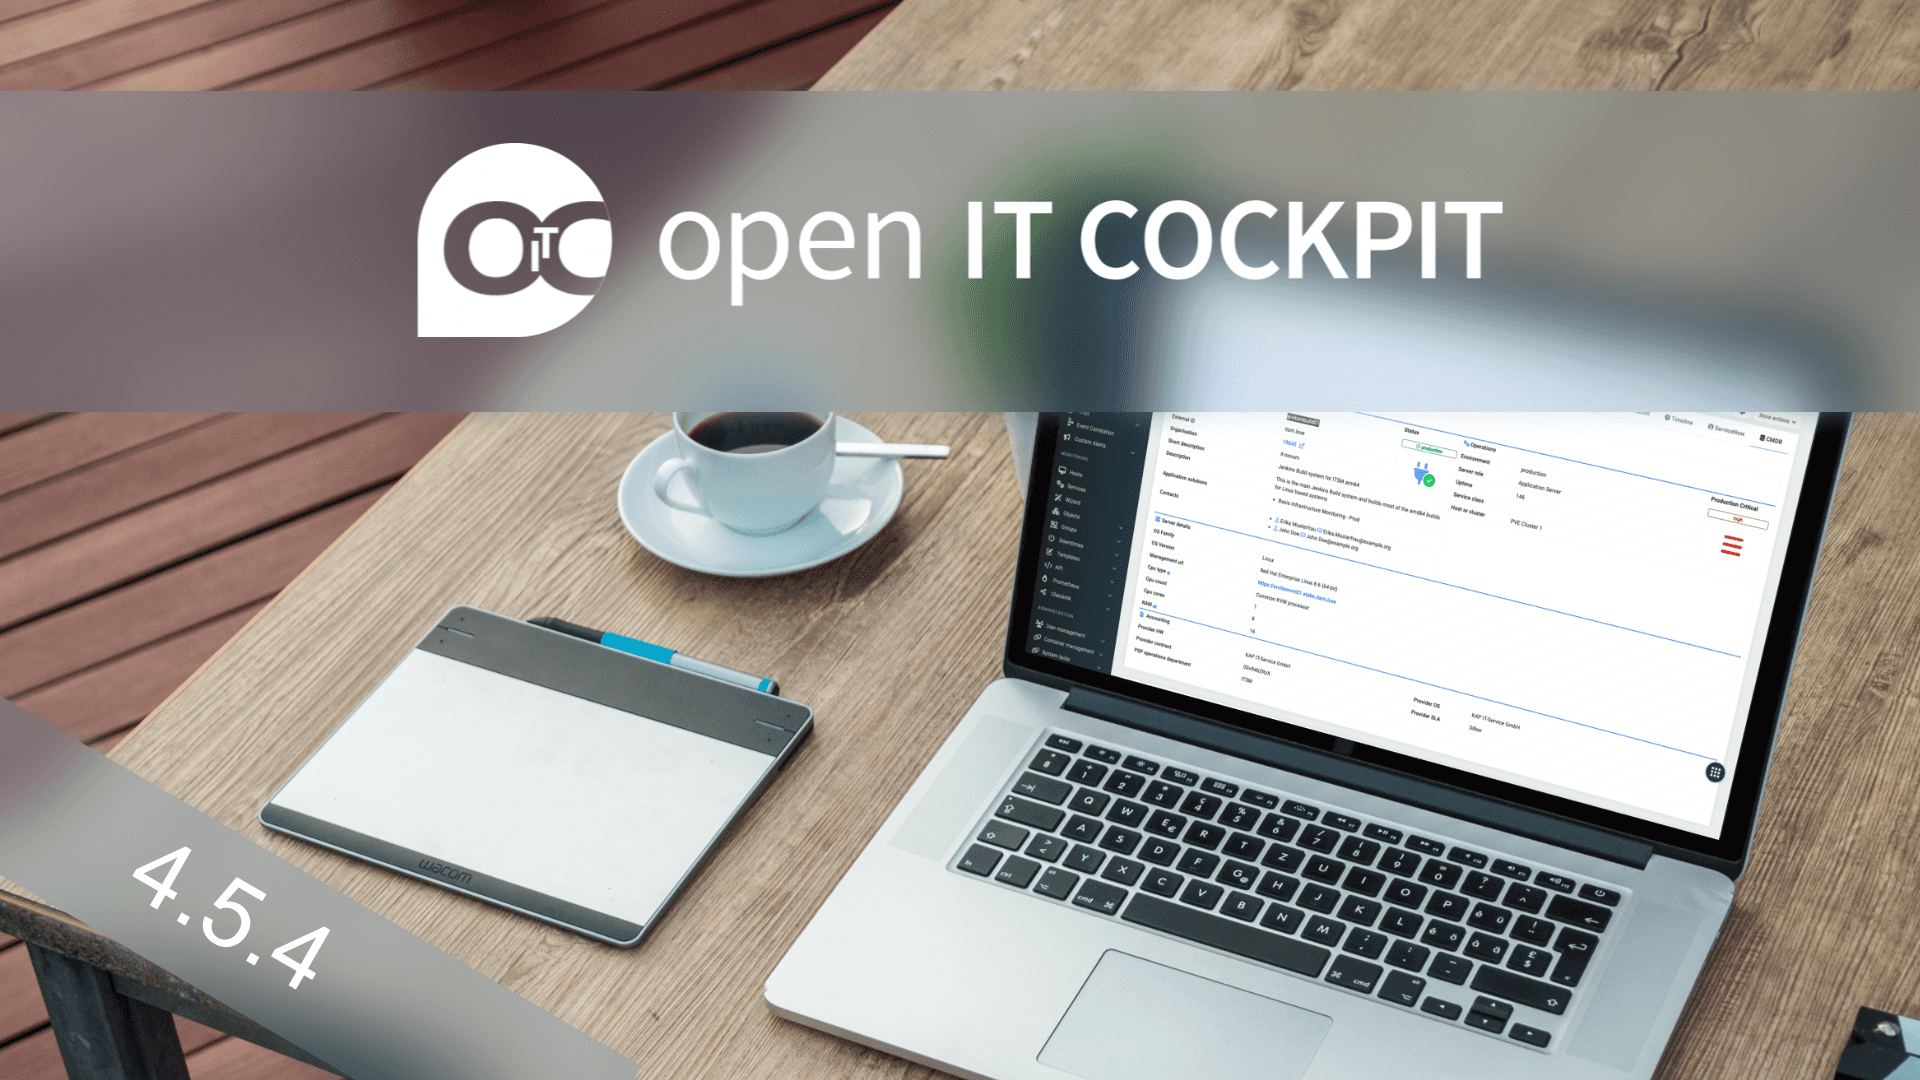 openITCOCKPIT 4.5.4 released